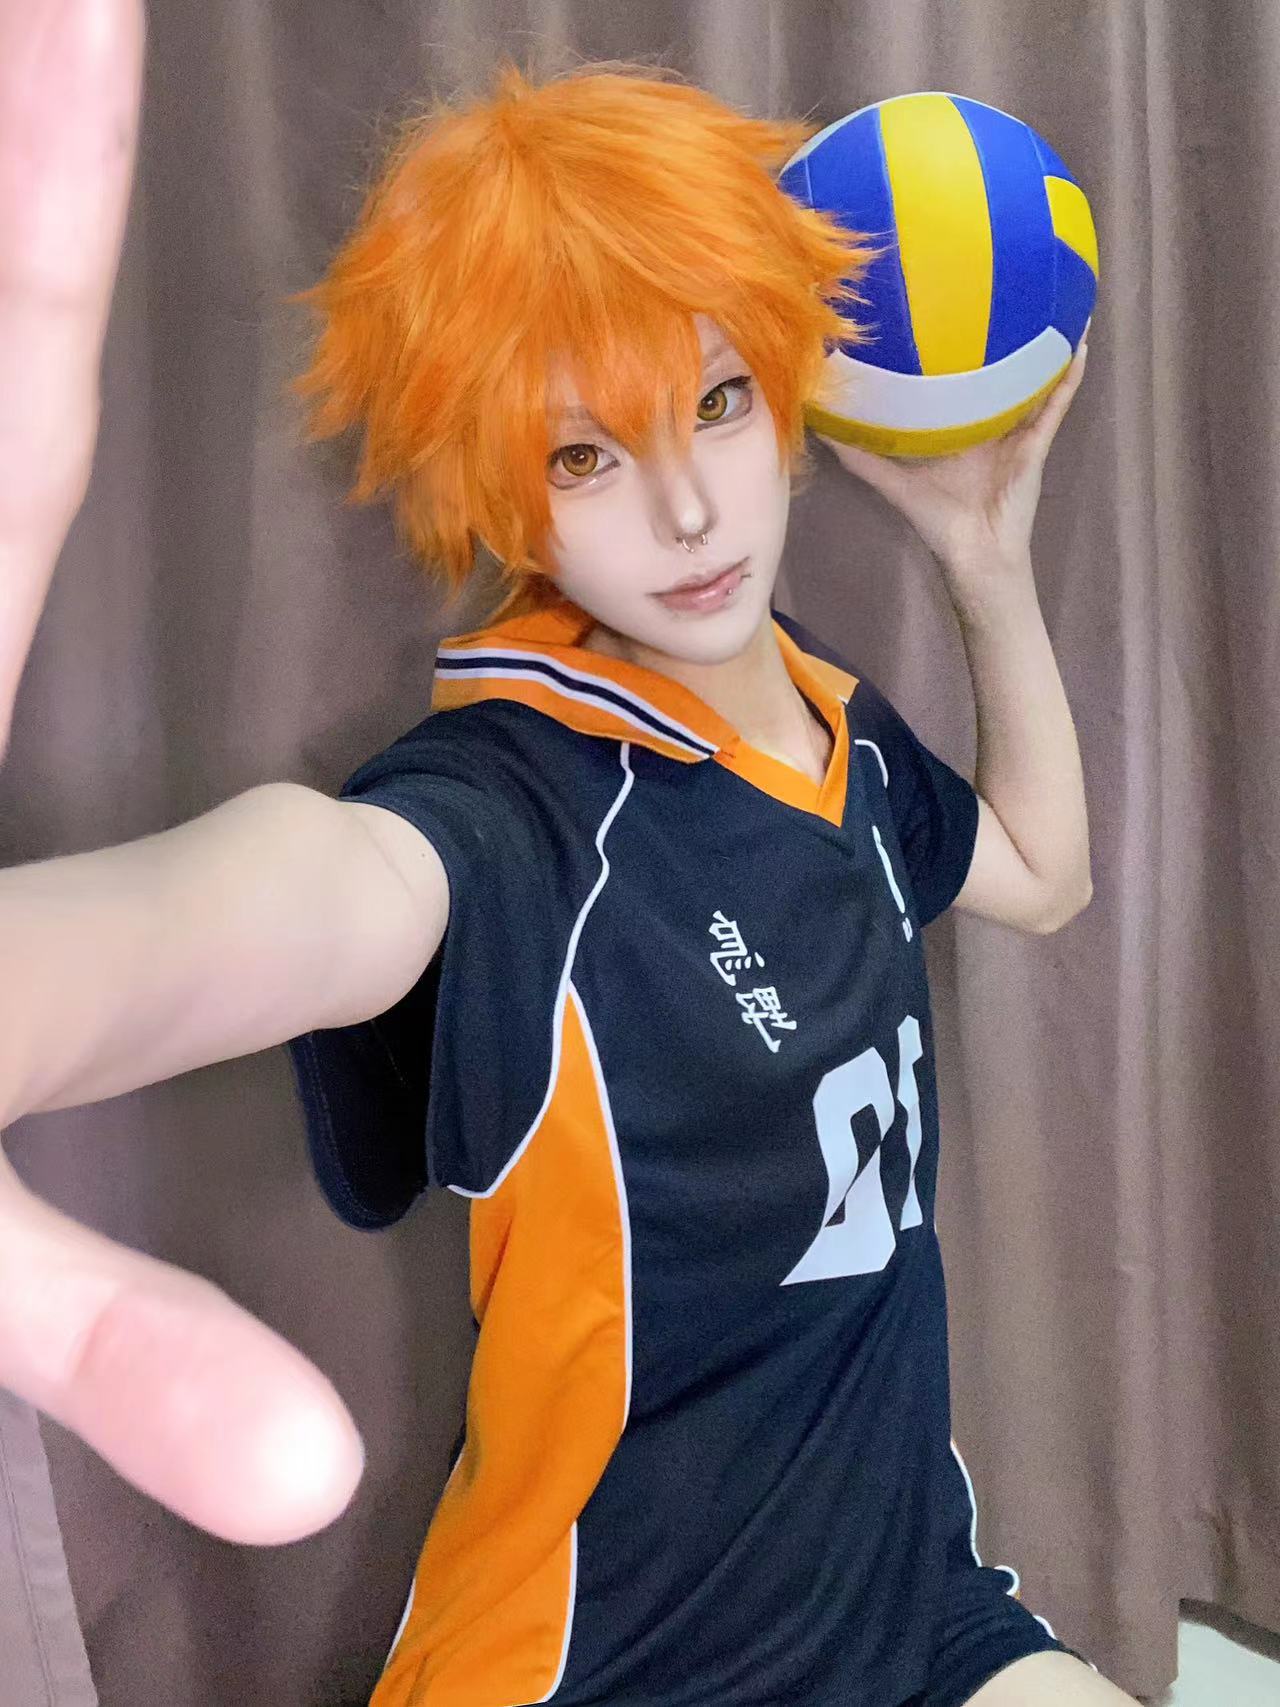 HOLOUN Anime Haikyuu Hinata Shouyou NO.10 Cosplay Costume KARASUNO High School Uniform Jerseys Volleyball Club